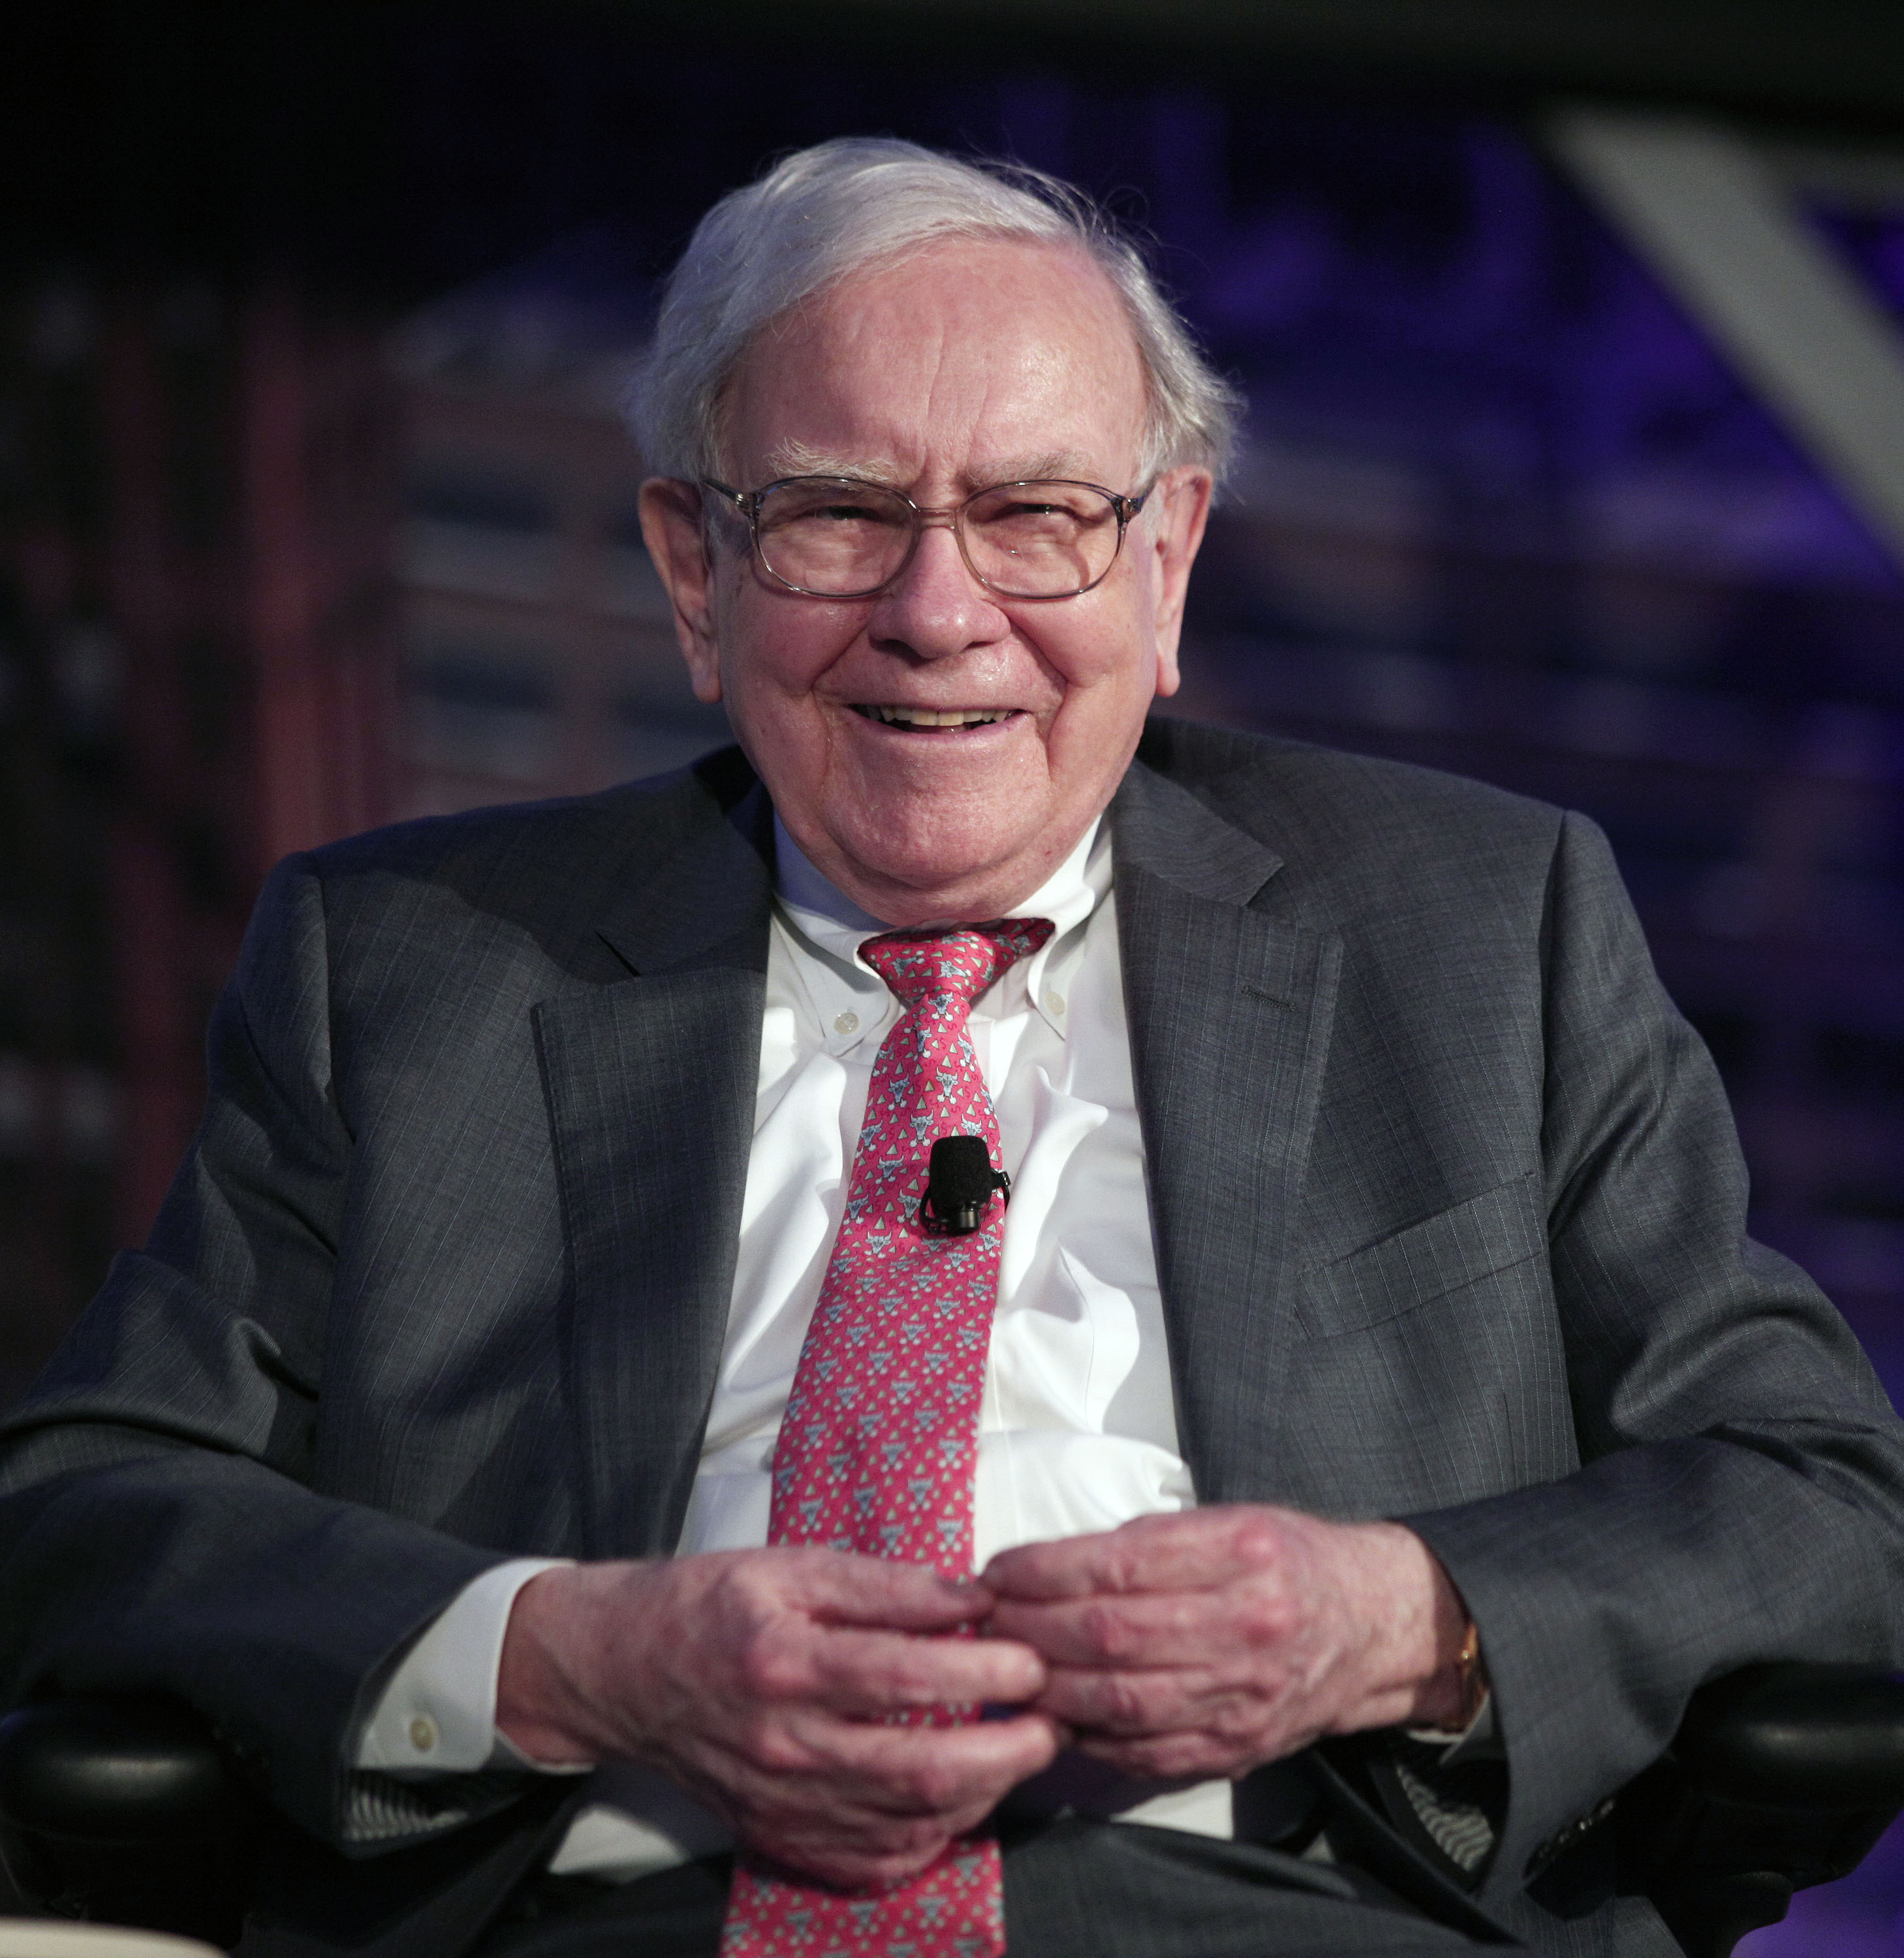 Billionaire investor Warren Buffett speaks at an event on September 18, 2014 in Detroit, Michigan.